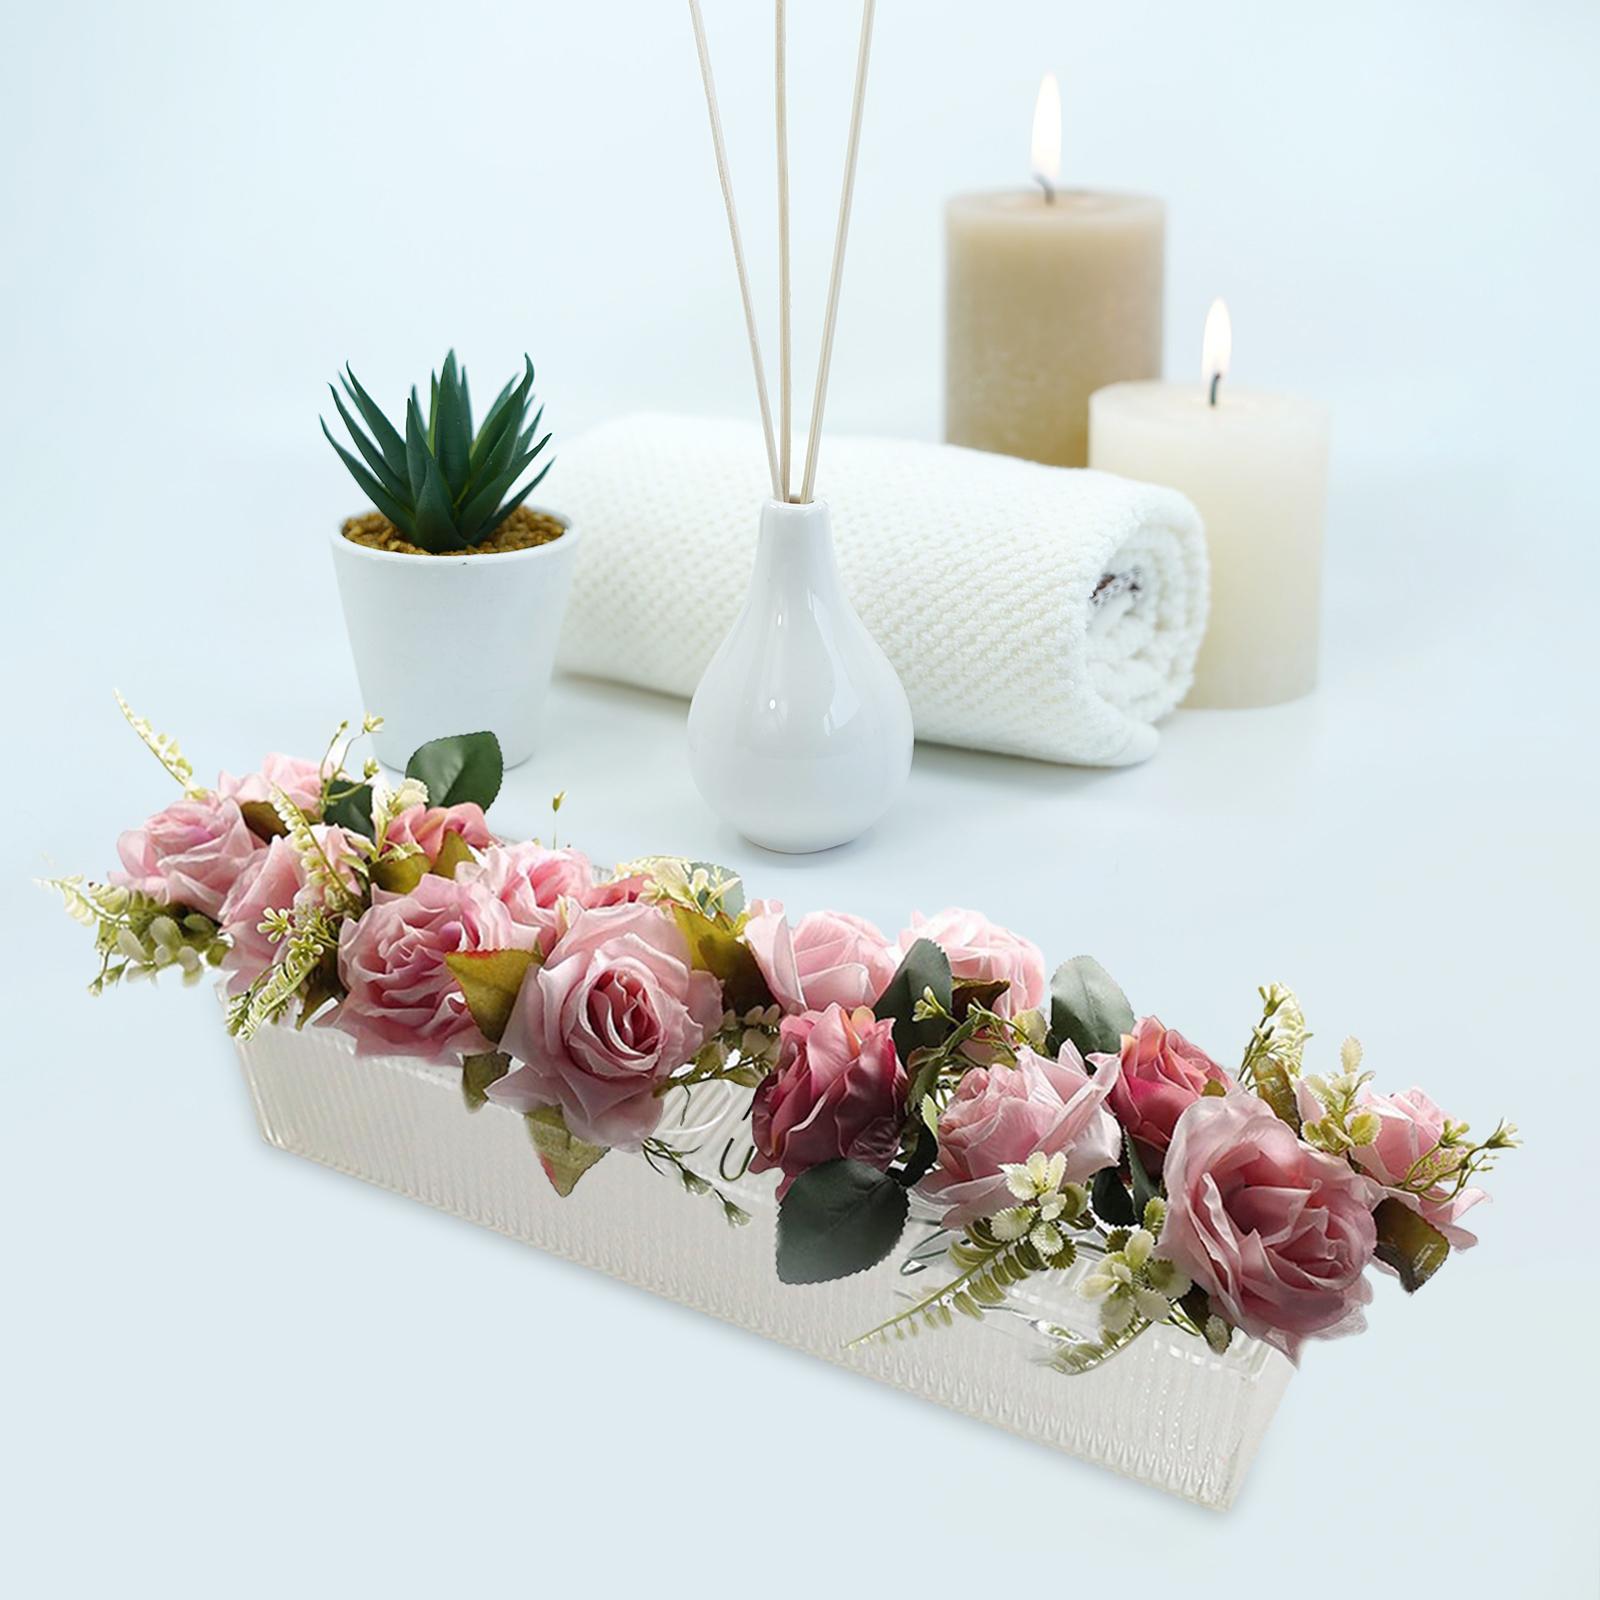 Acrylic Flower Vase Centerpiece Shelf Long Decorations with Vertical Stripes 30x10x6.5cm